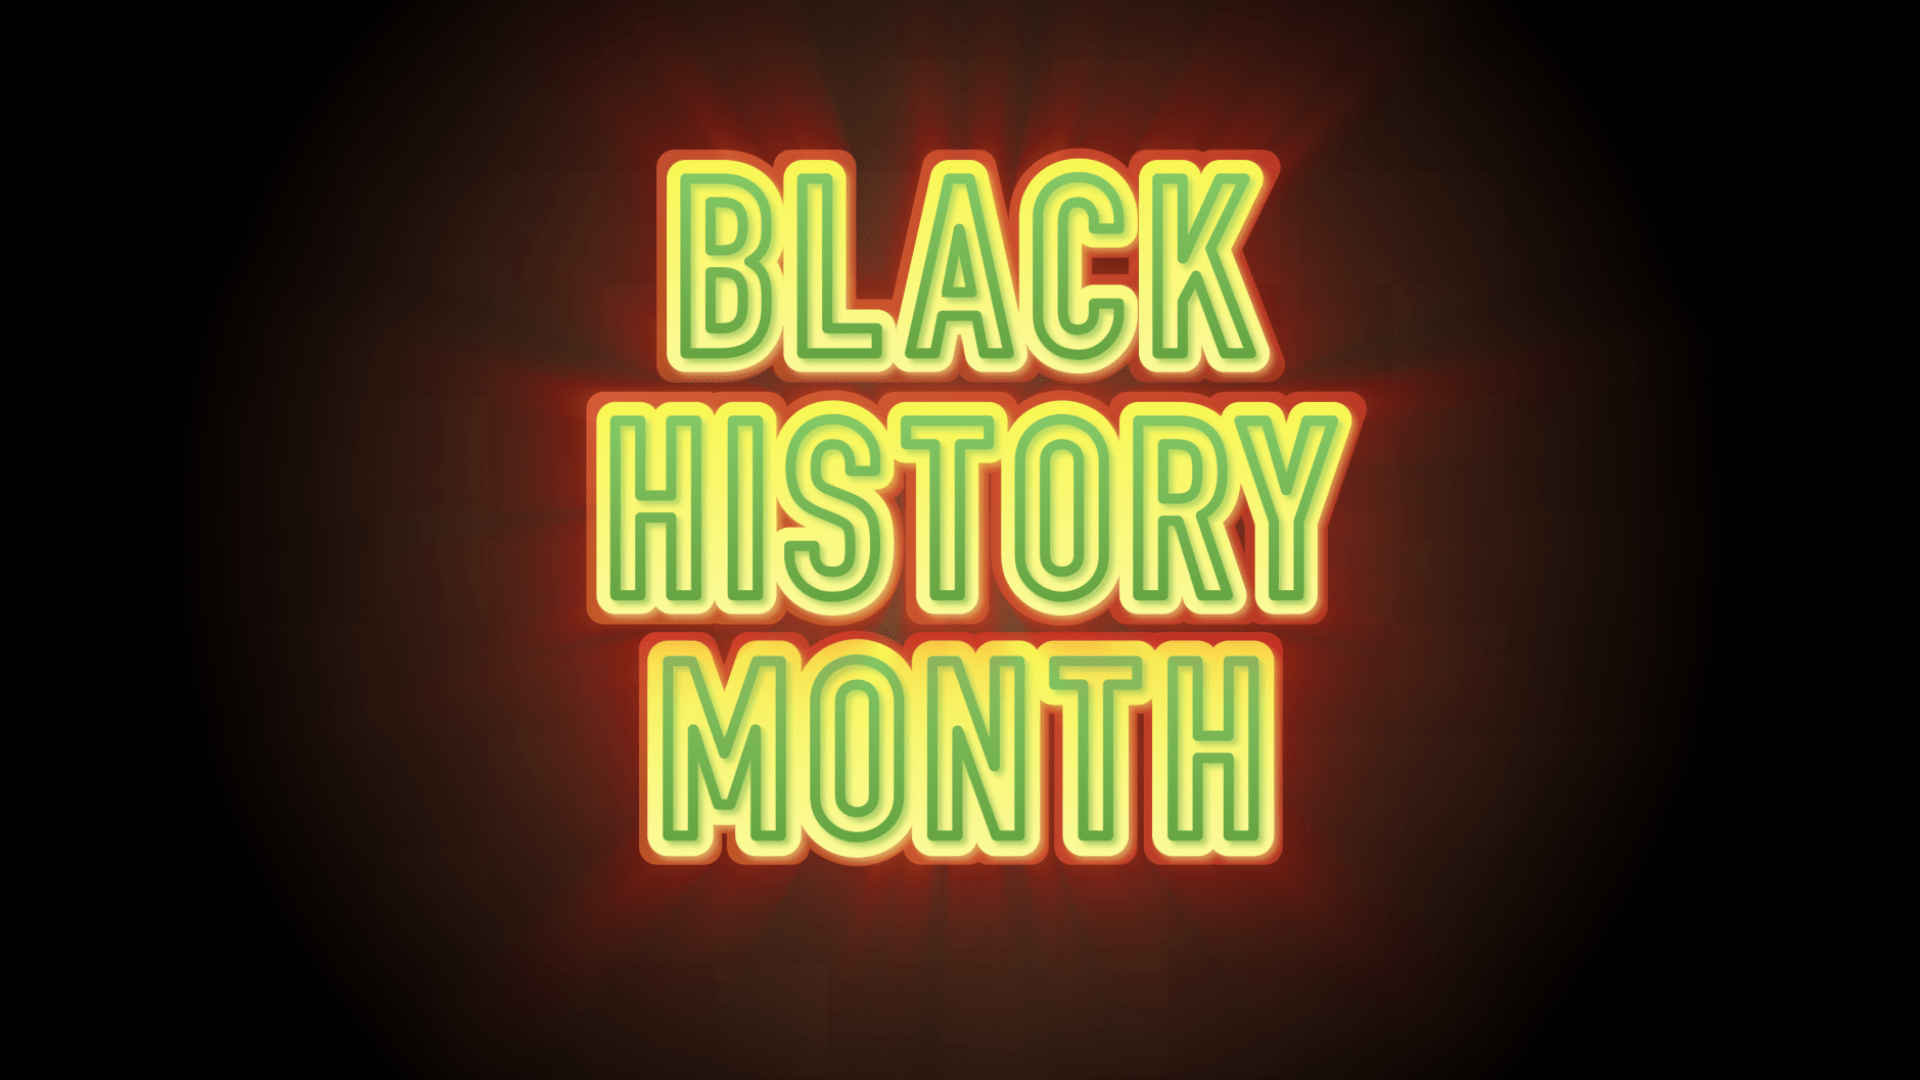 Black History Month 2020 Videos - Neon Sign - HD Wallpaper 